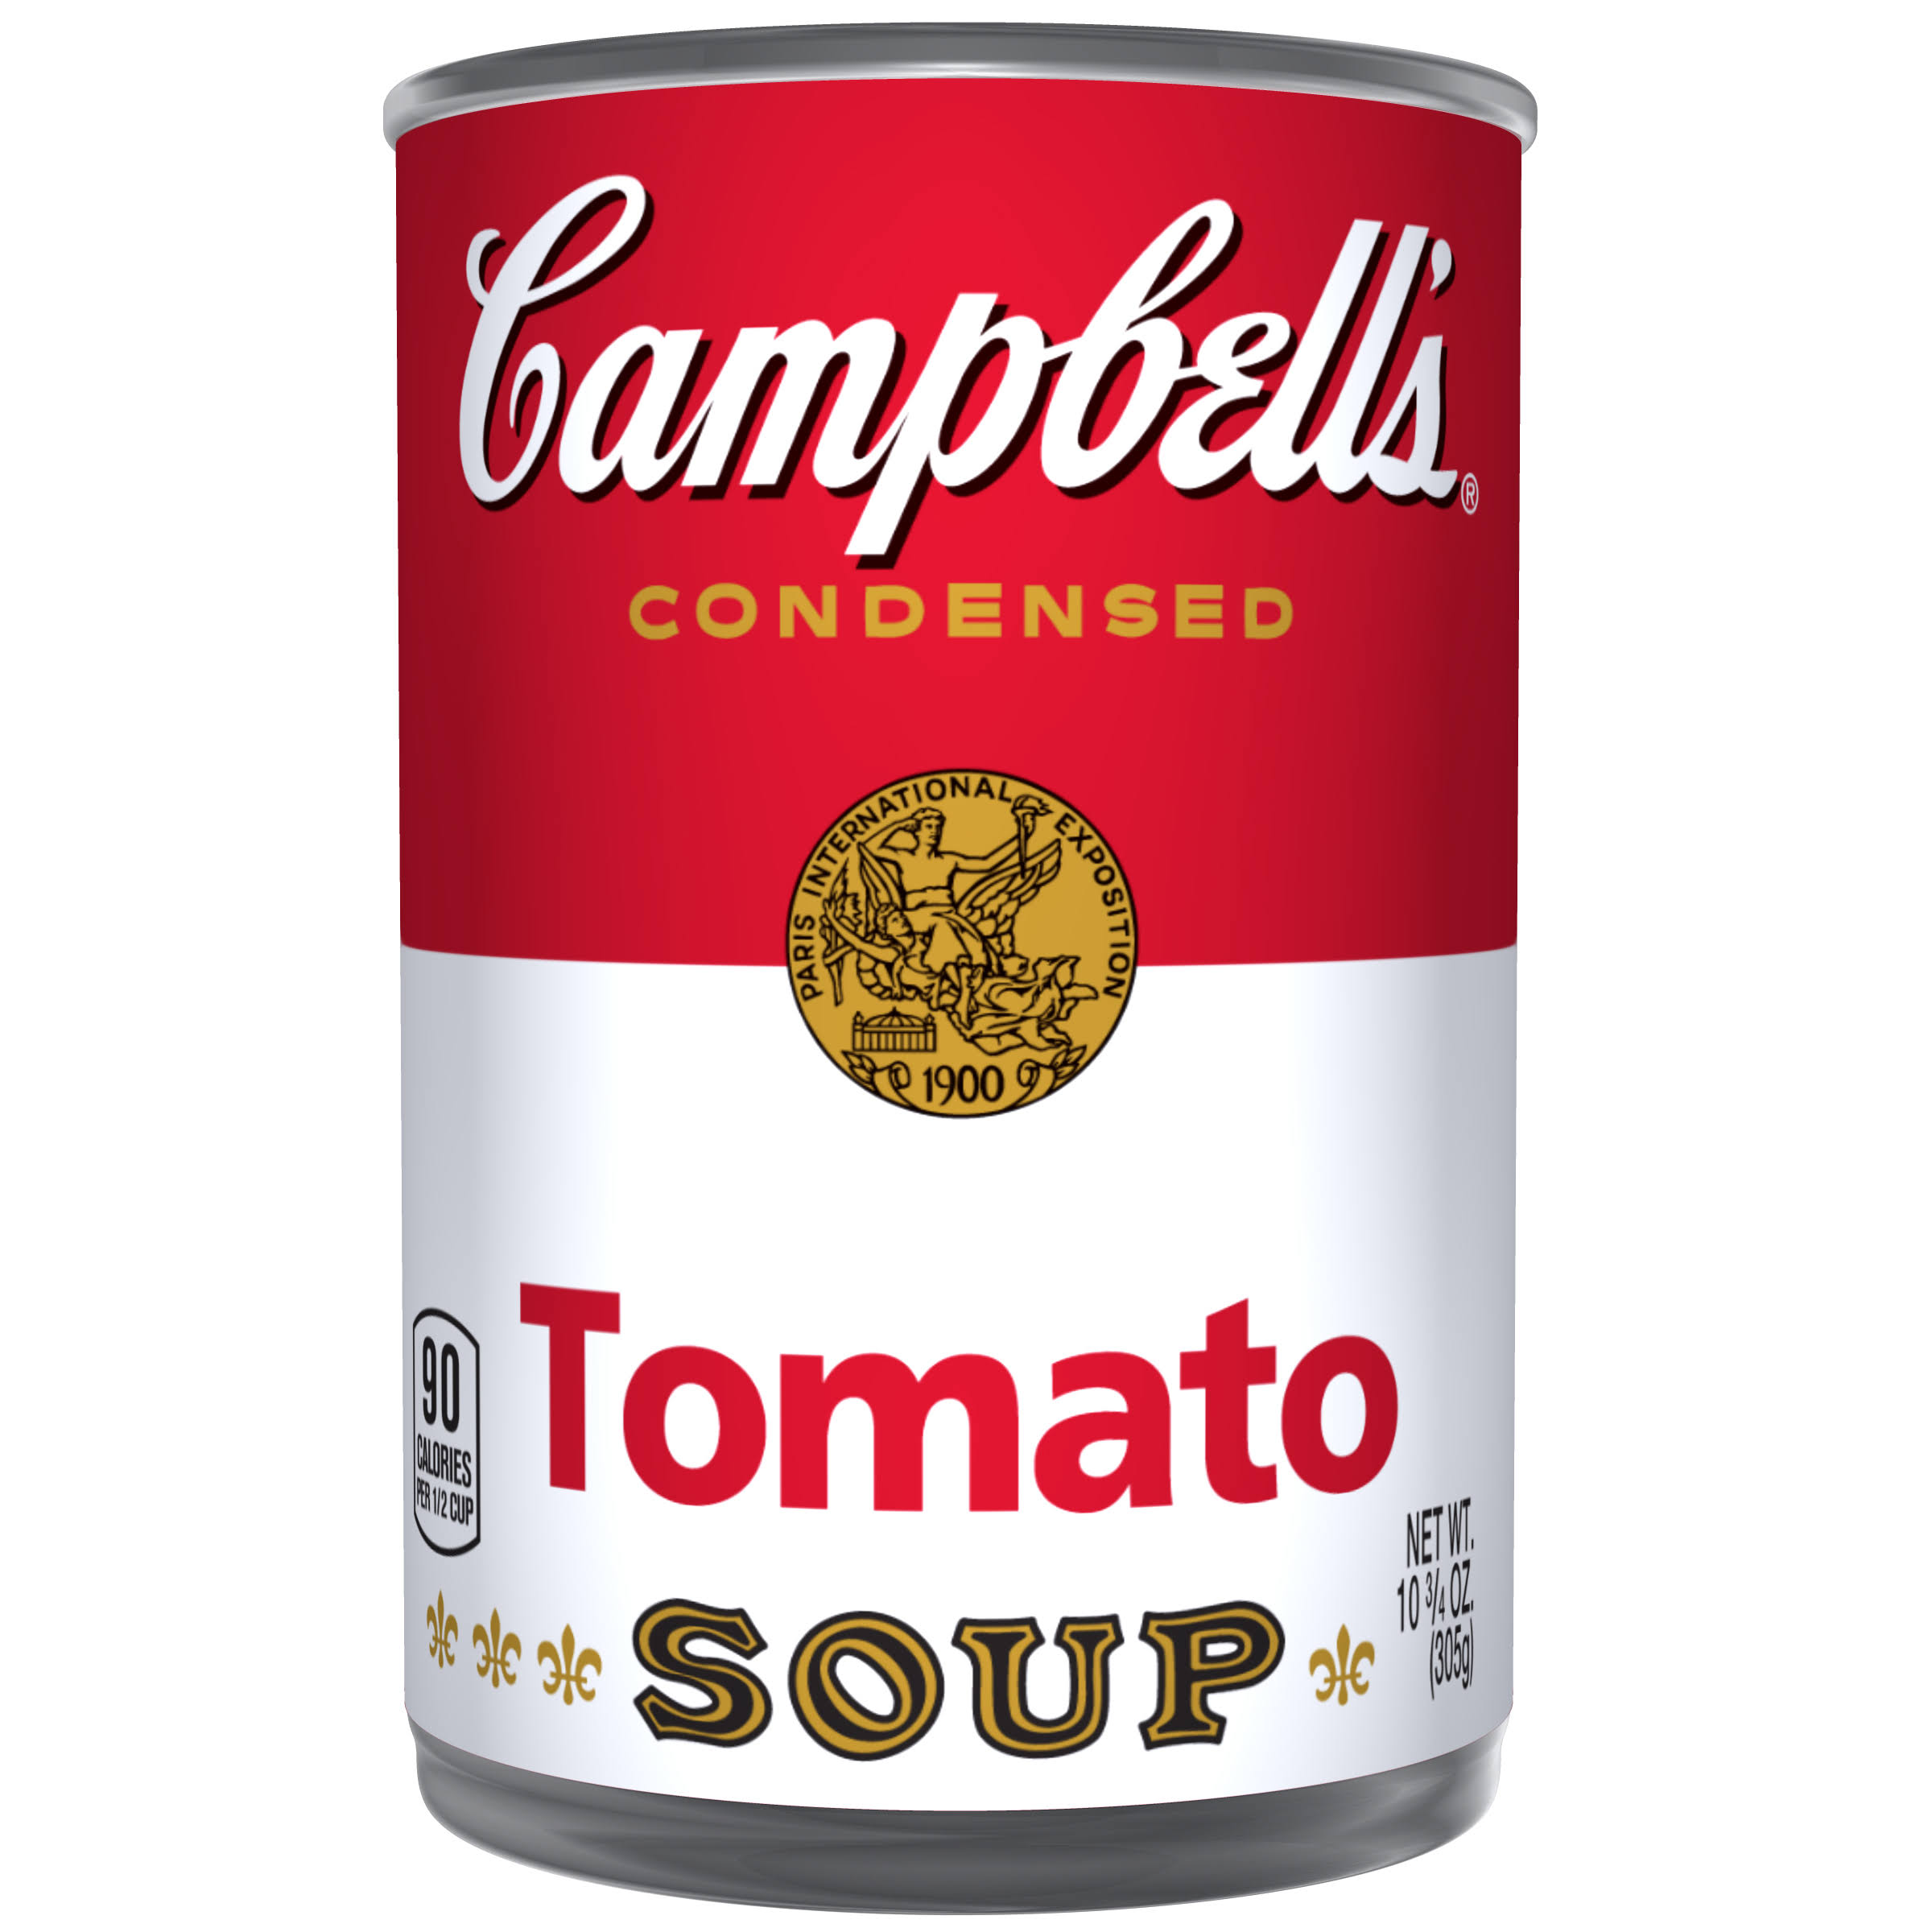 Campbells Tomato Soup - 305g